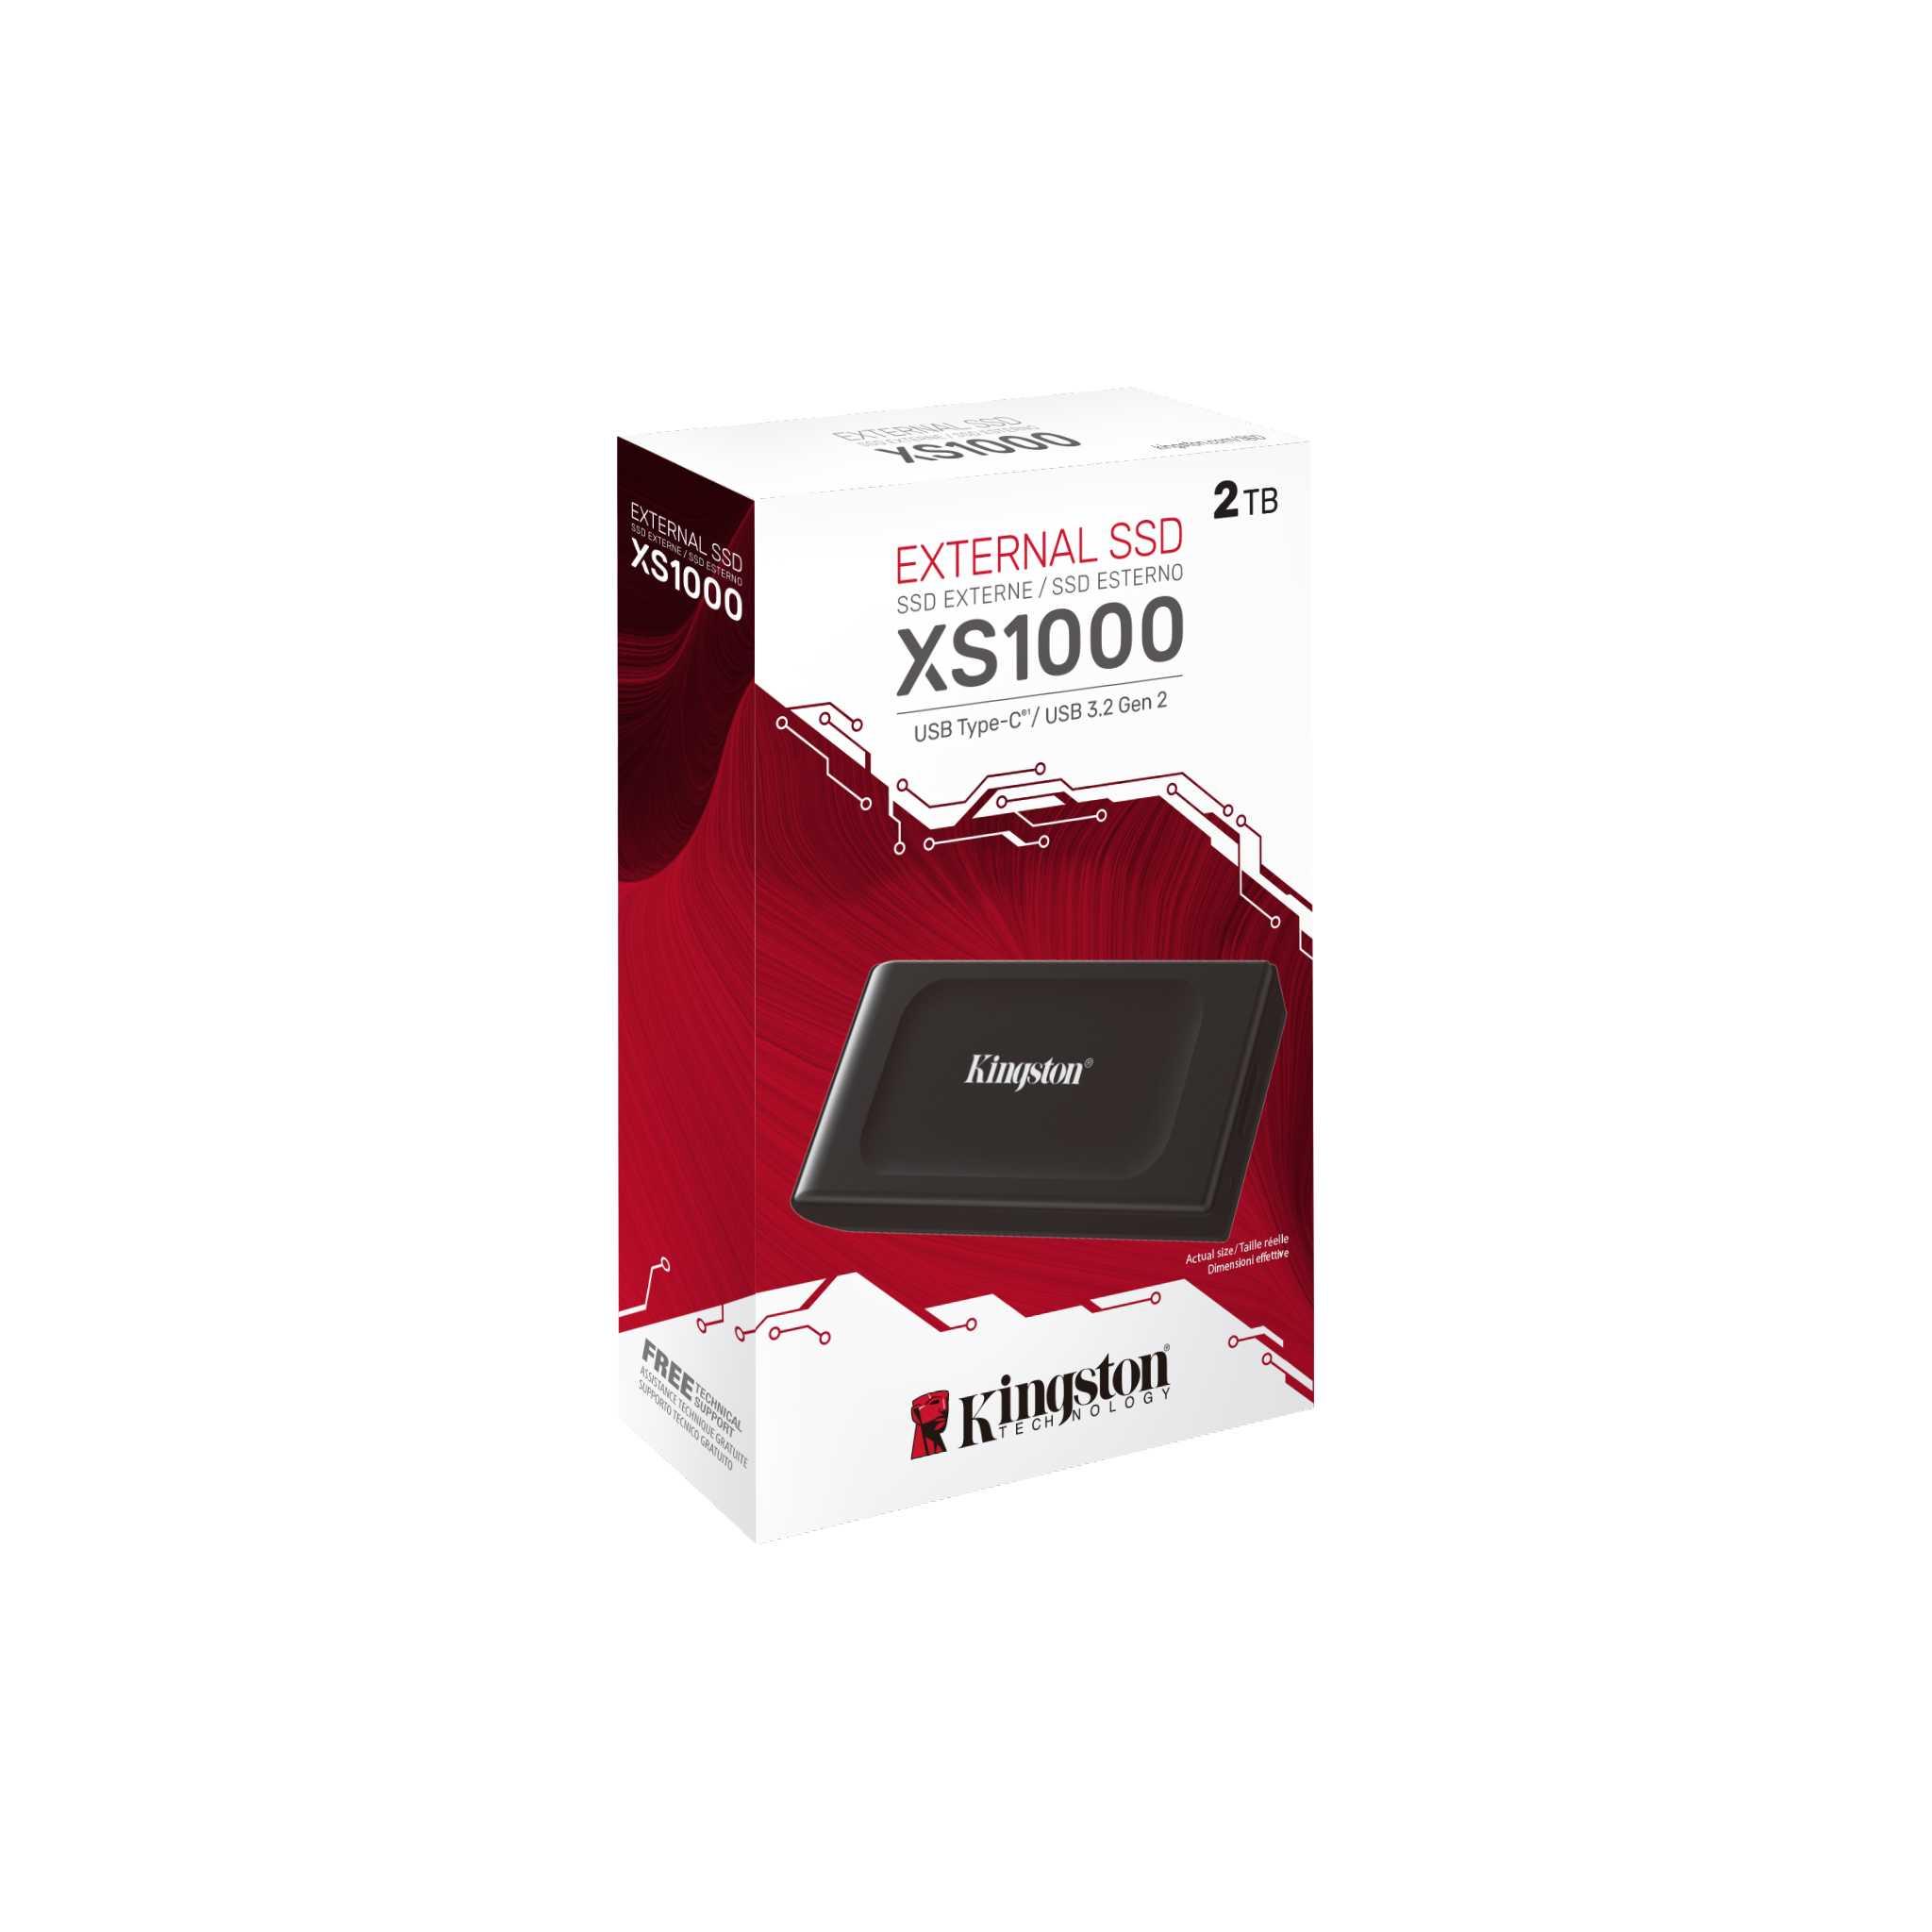 Външен SSD Kingston XS1000, 2TB, USB 3.2 Gen2 Type-C, Черен-3